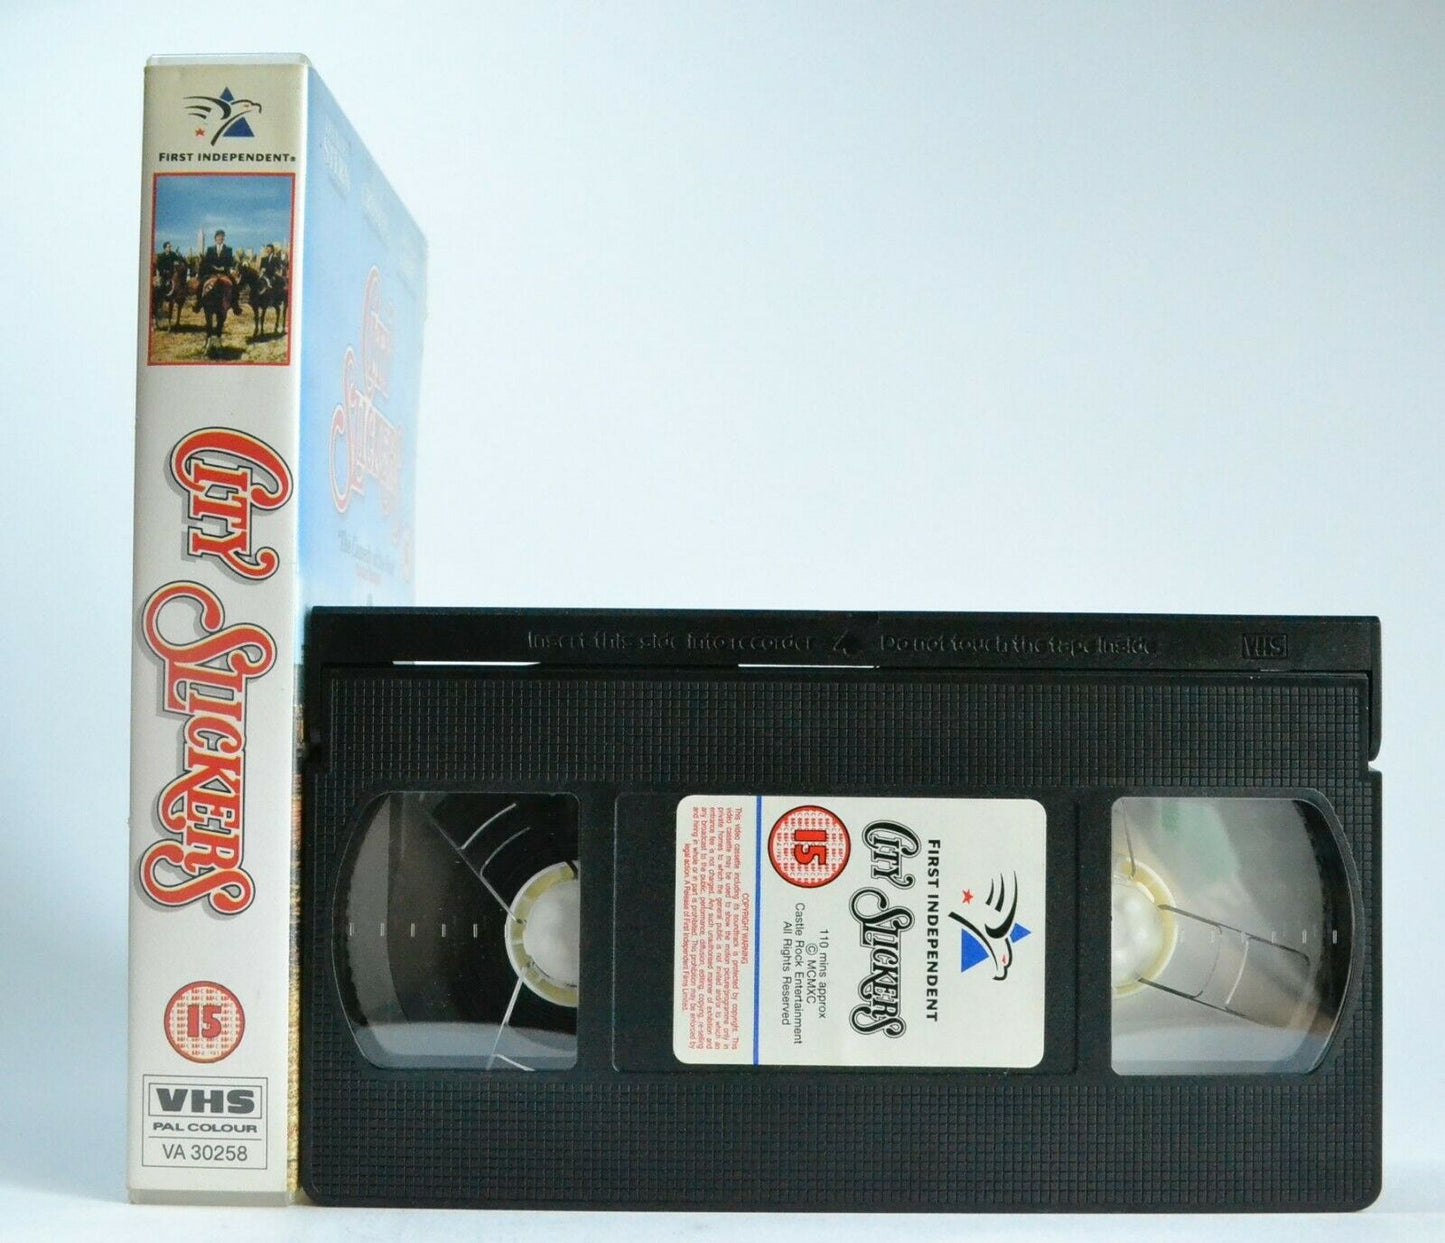 City Slickers (1991): Comedy Western - Billy Crystal/Jack Palance - Pal VHS-